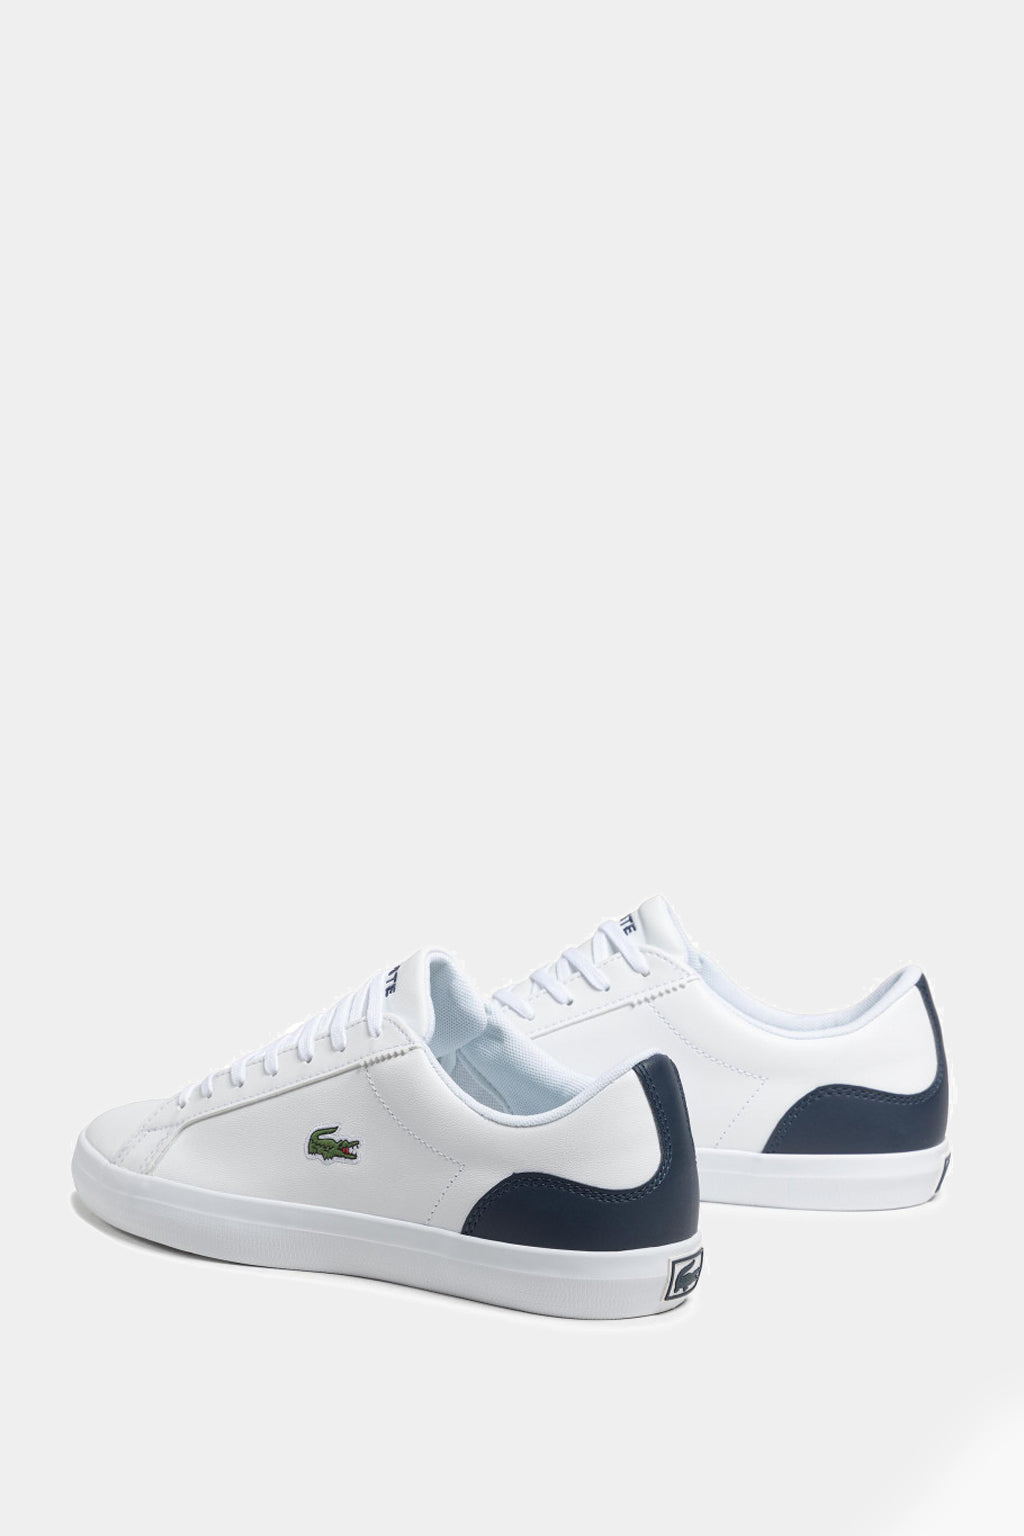 Lacoste - Lacoste - Lerond BL 21 1 Cma Men's White - Navy Sneaker